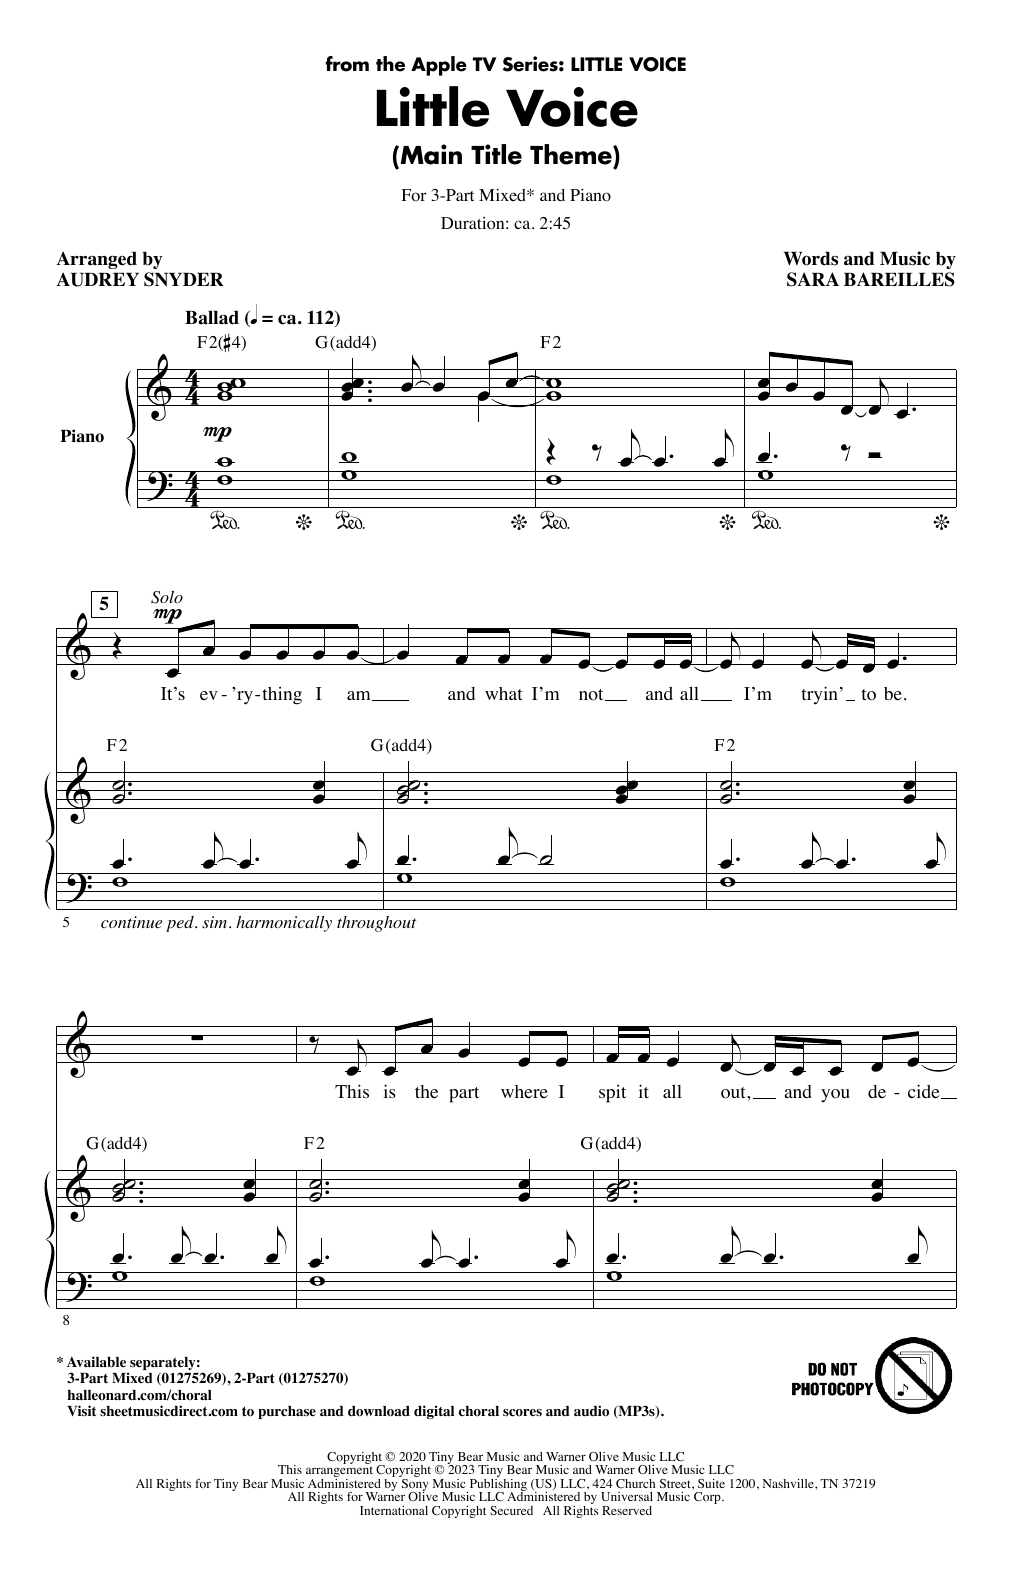 Sara Bareilles Little Voice - Main Title Theme (arr. Audrey Snyder) Sheet Music Notes & Chords for 2-Part Choir - Download or Print PDF